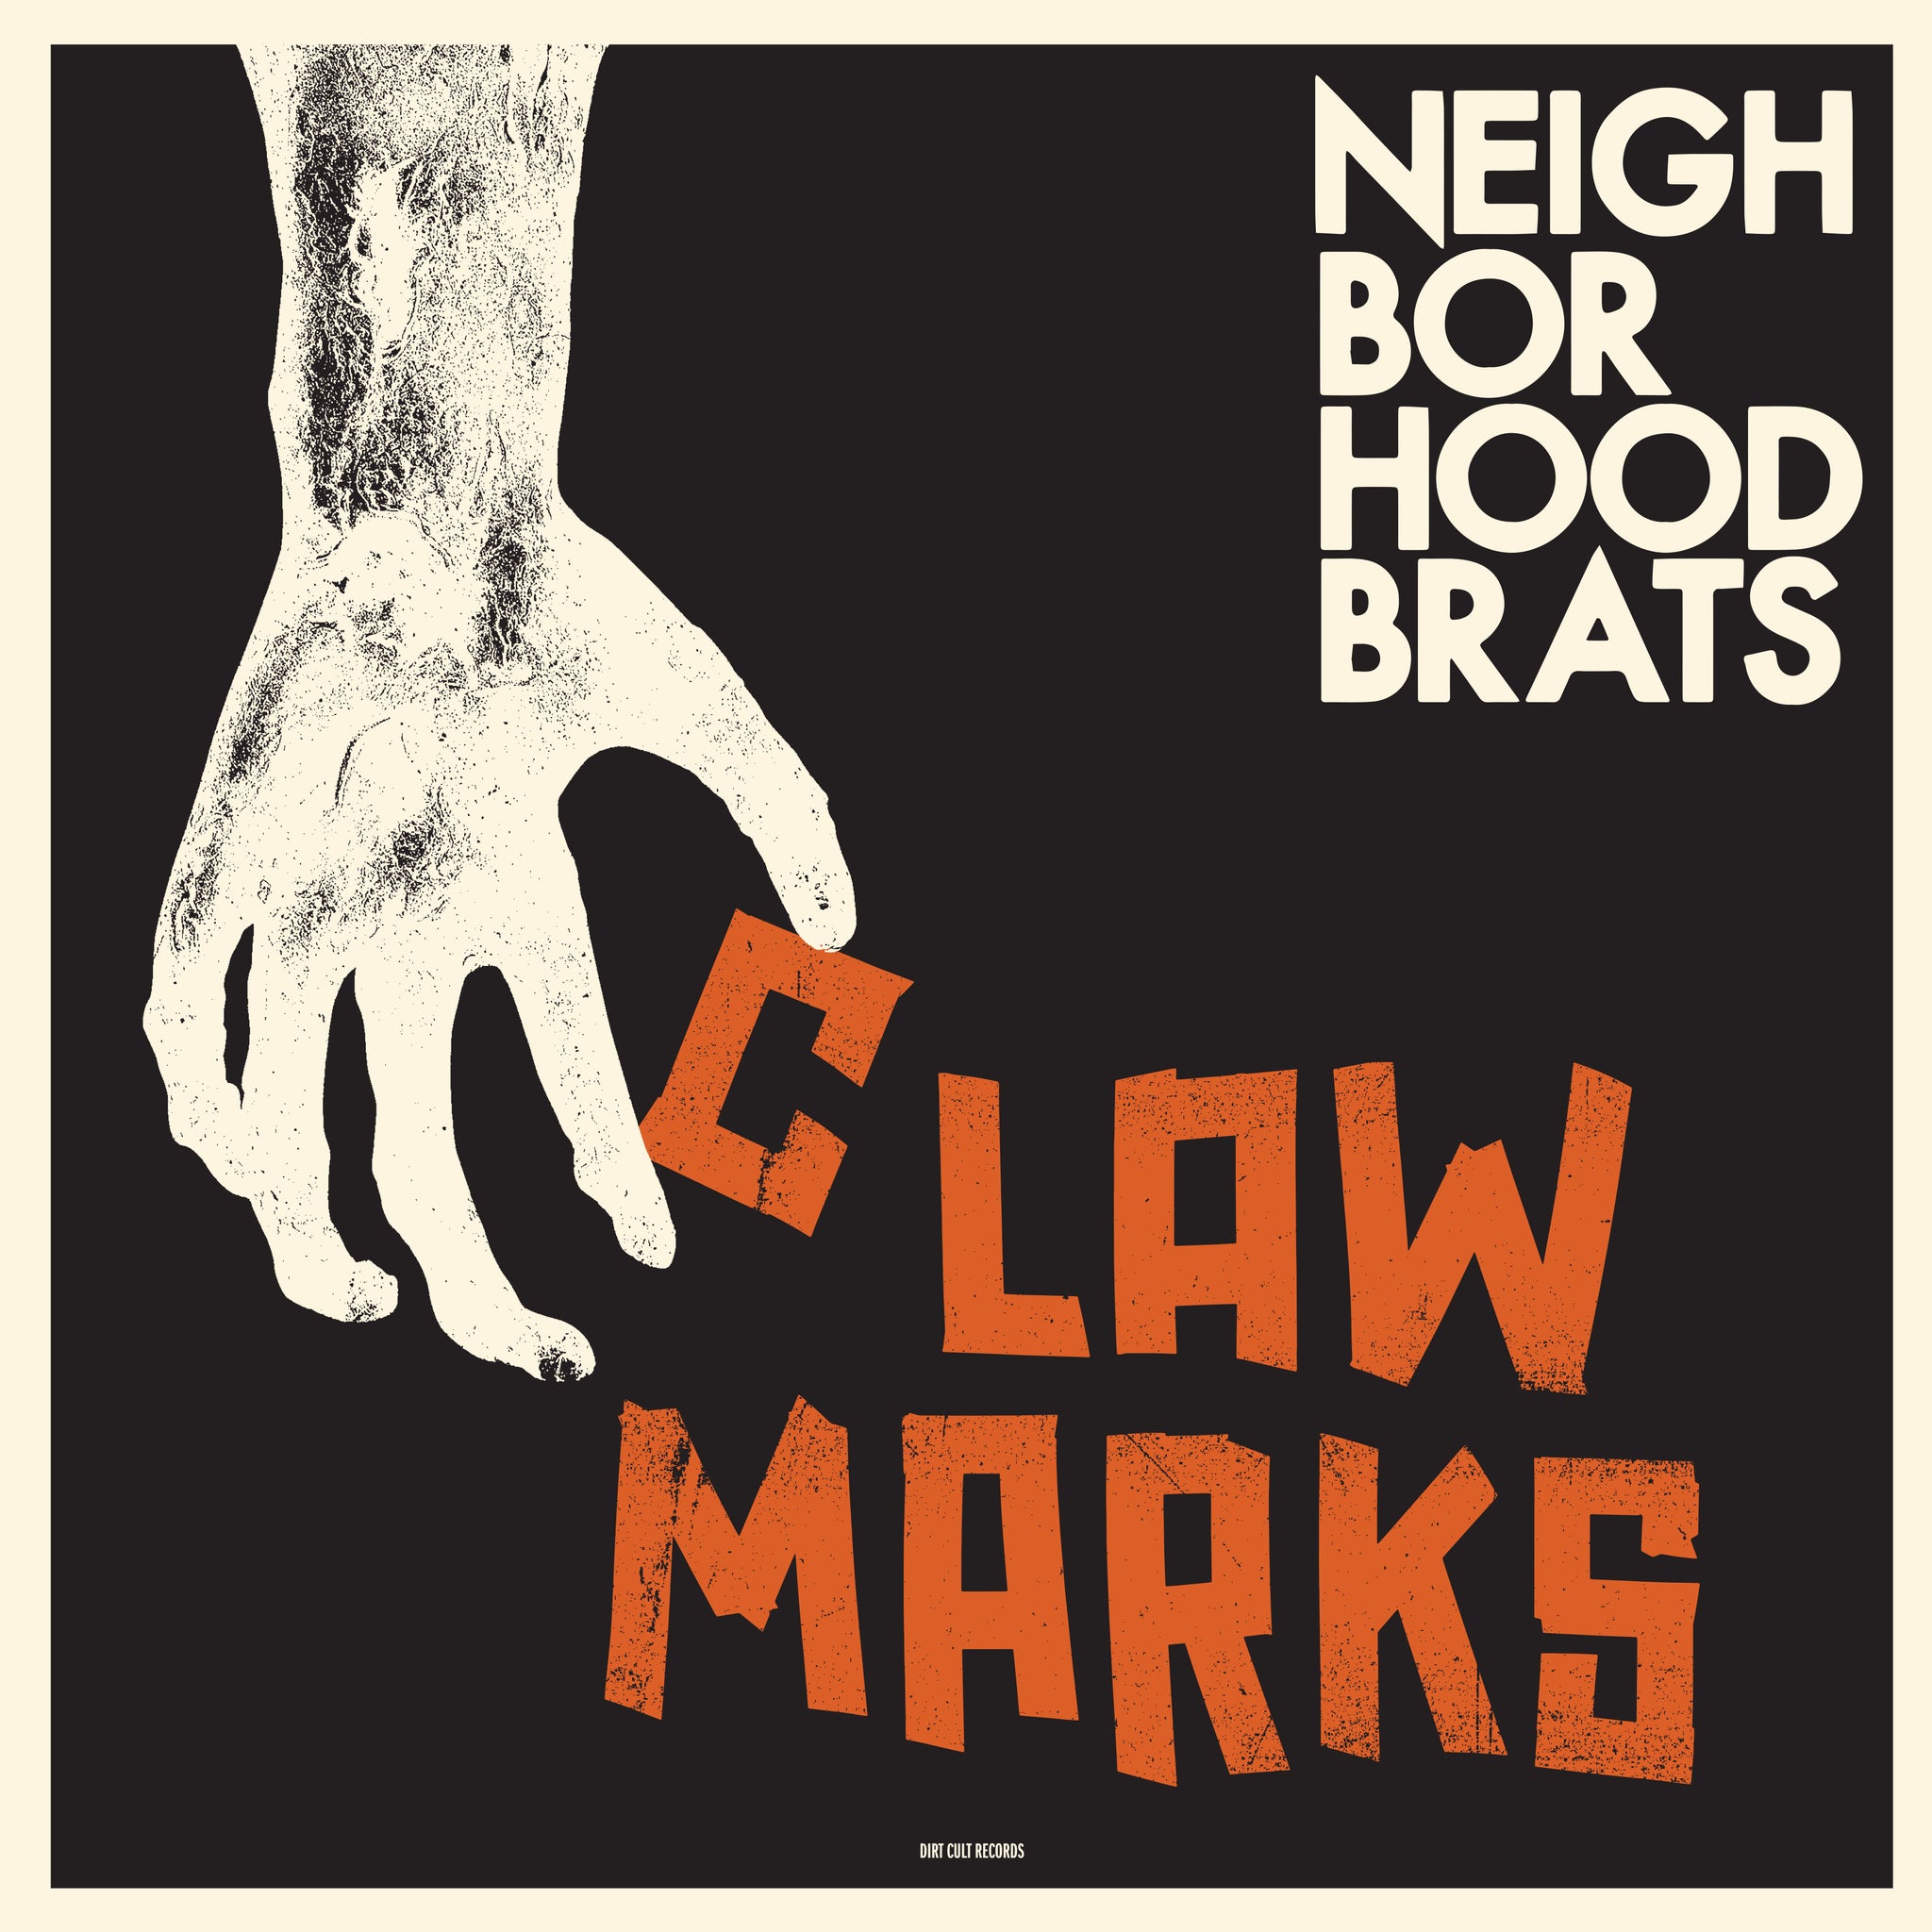 Neighborhood Brats - Claw Marks - New LP